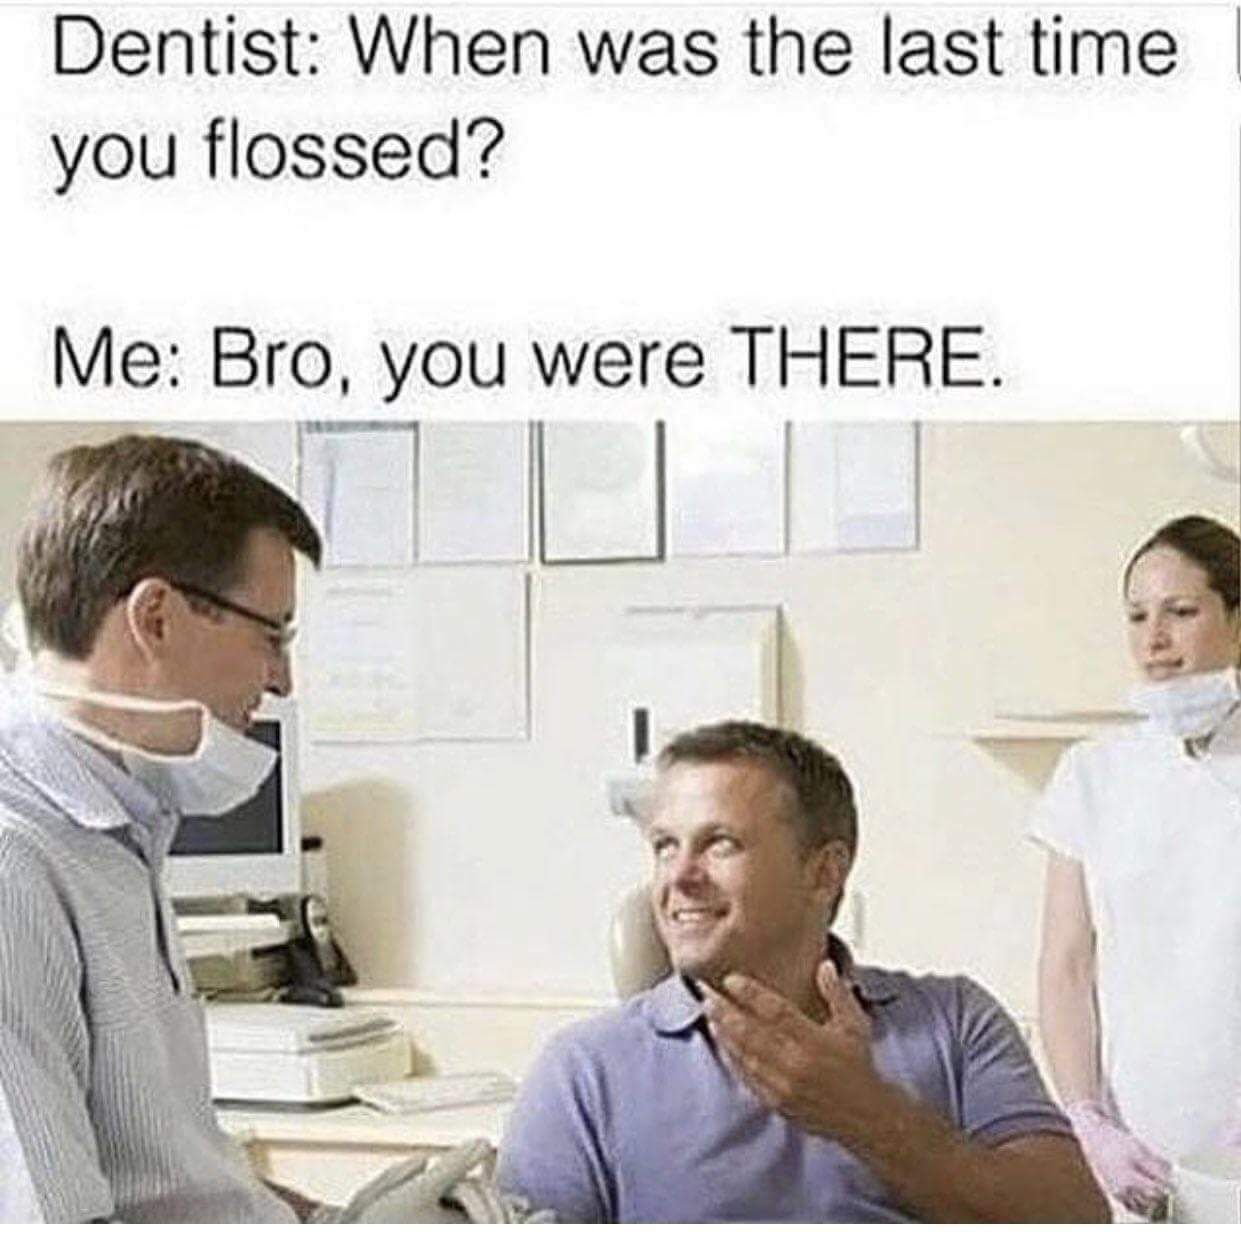 My next conversation at the dentist...